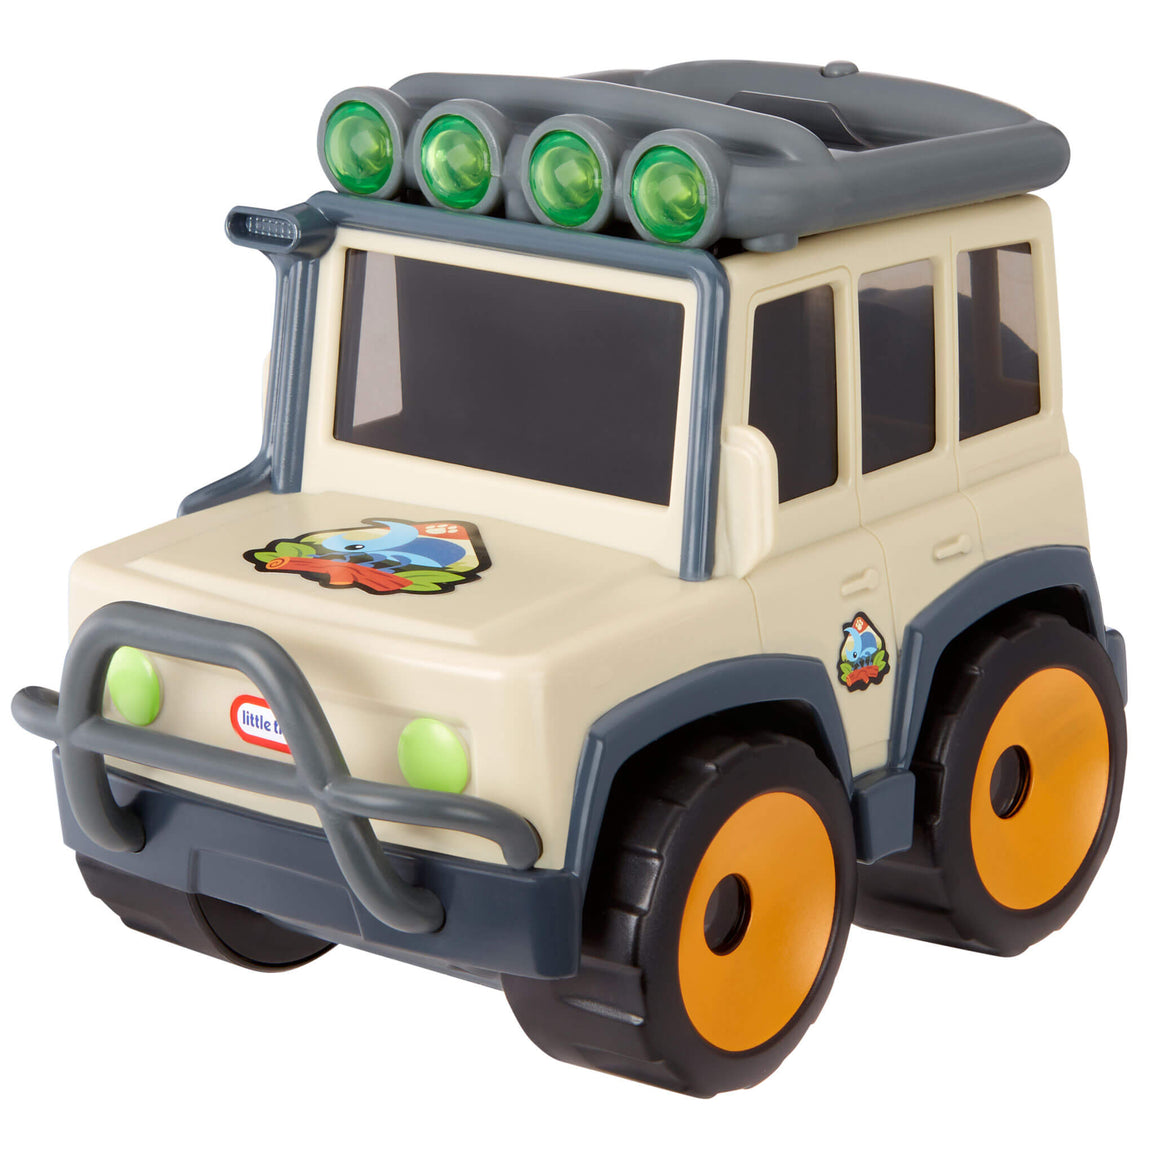 Big Adventures™ Binocular Searching Safari SUV - Official Little Tikes Website